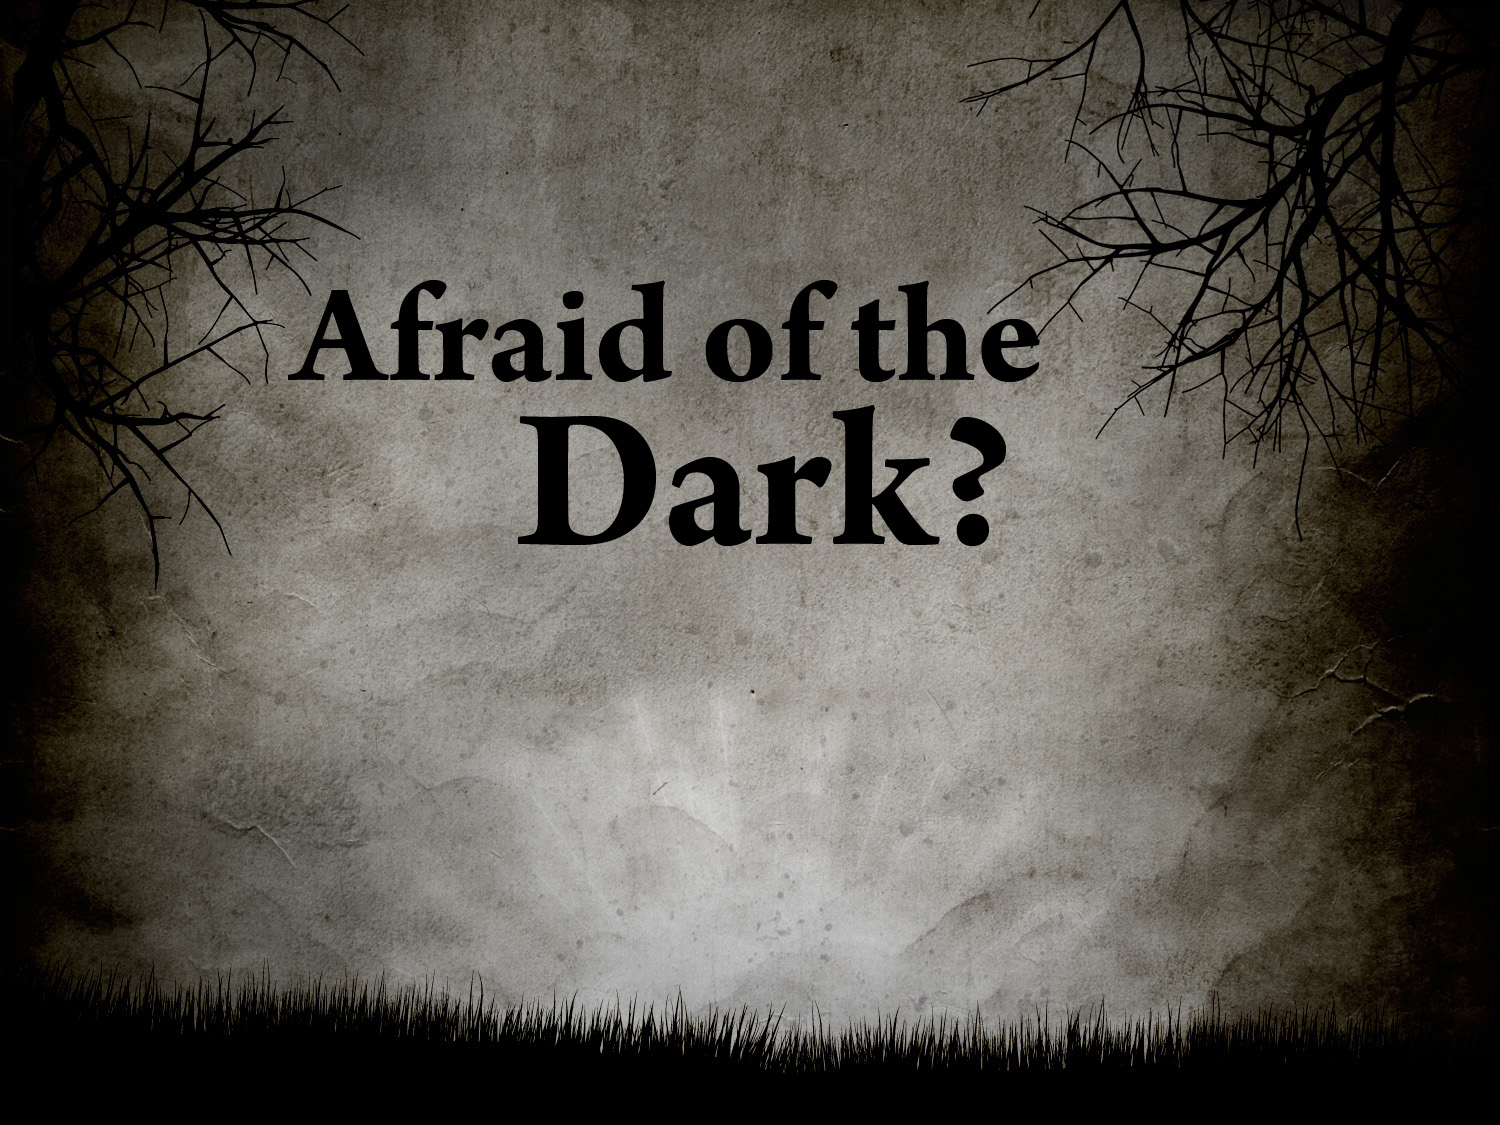 Afraid of something. Afraid of the Dark 1.16.5. Be afraid of Dark. Don't be afraid of the Dark.